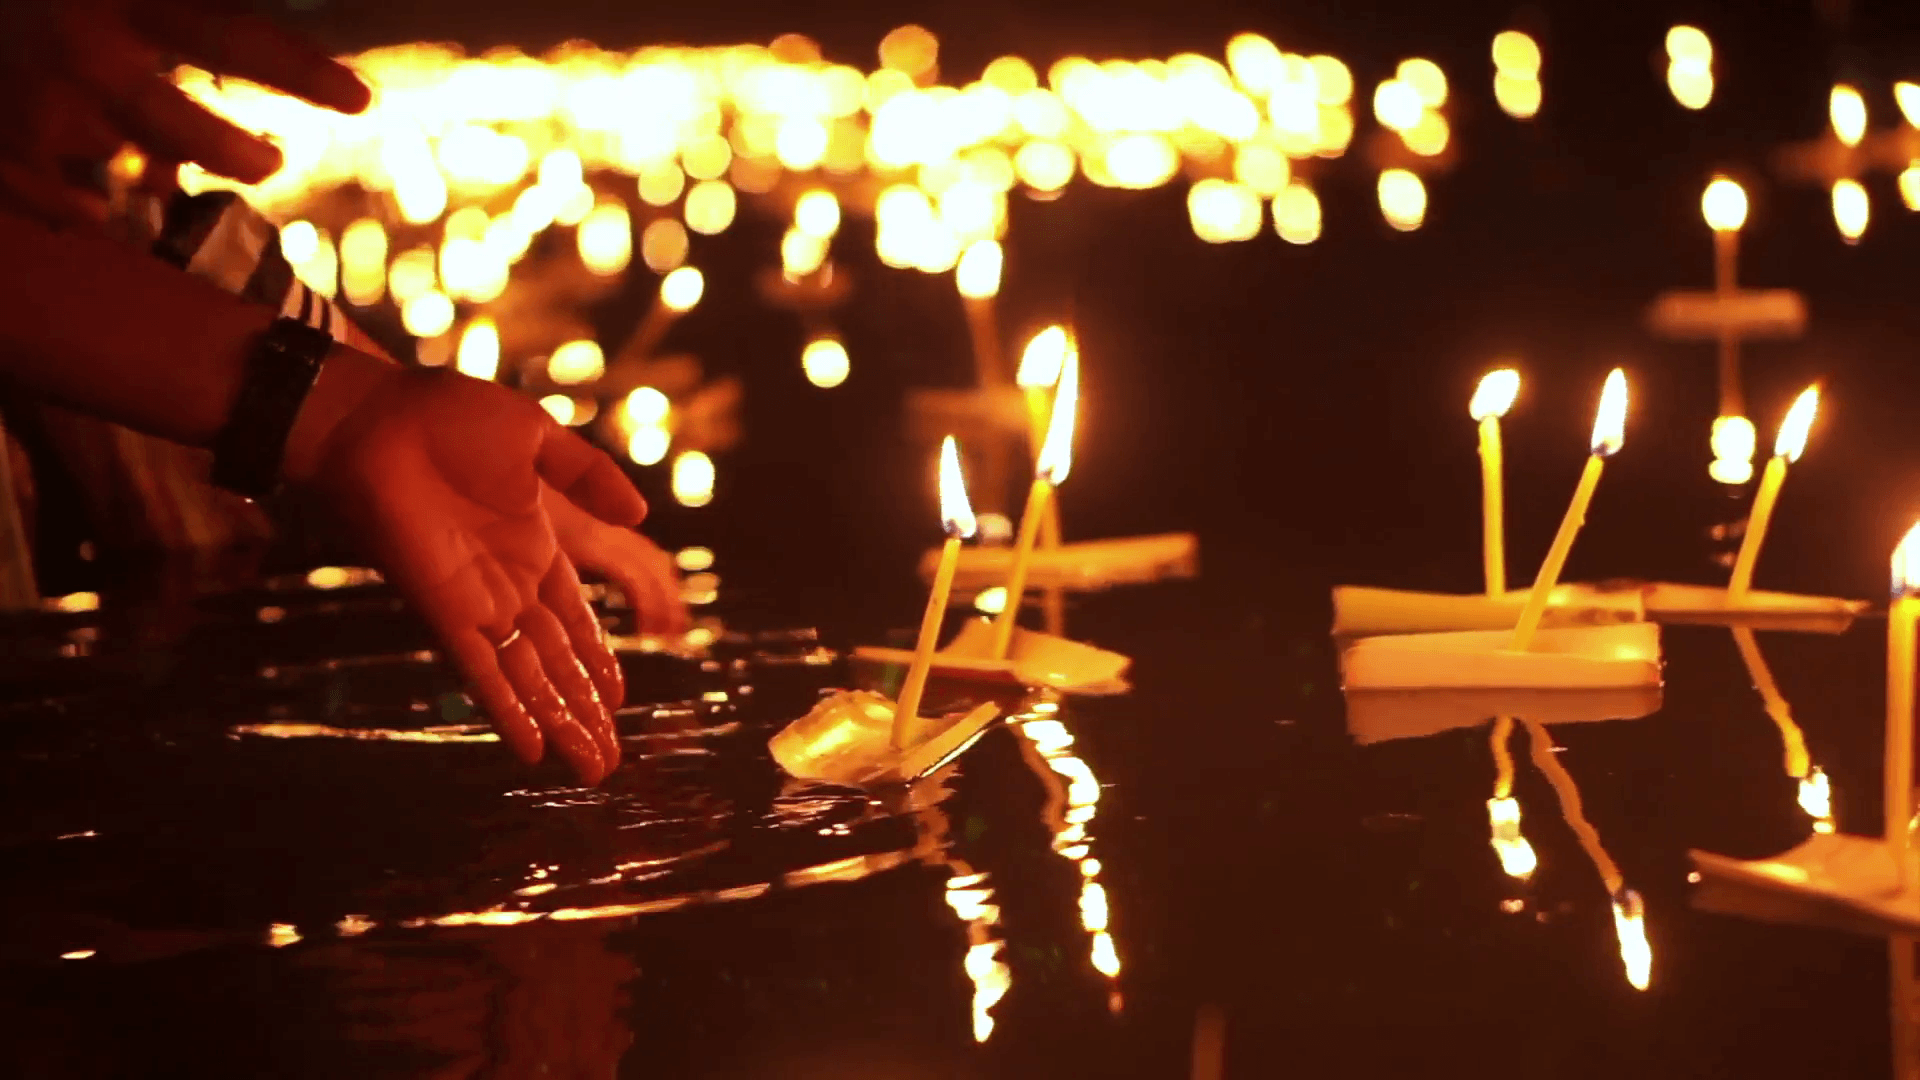 Loi Krathong Festival in Chiangmai, Thailand. Hand releasing